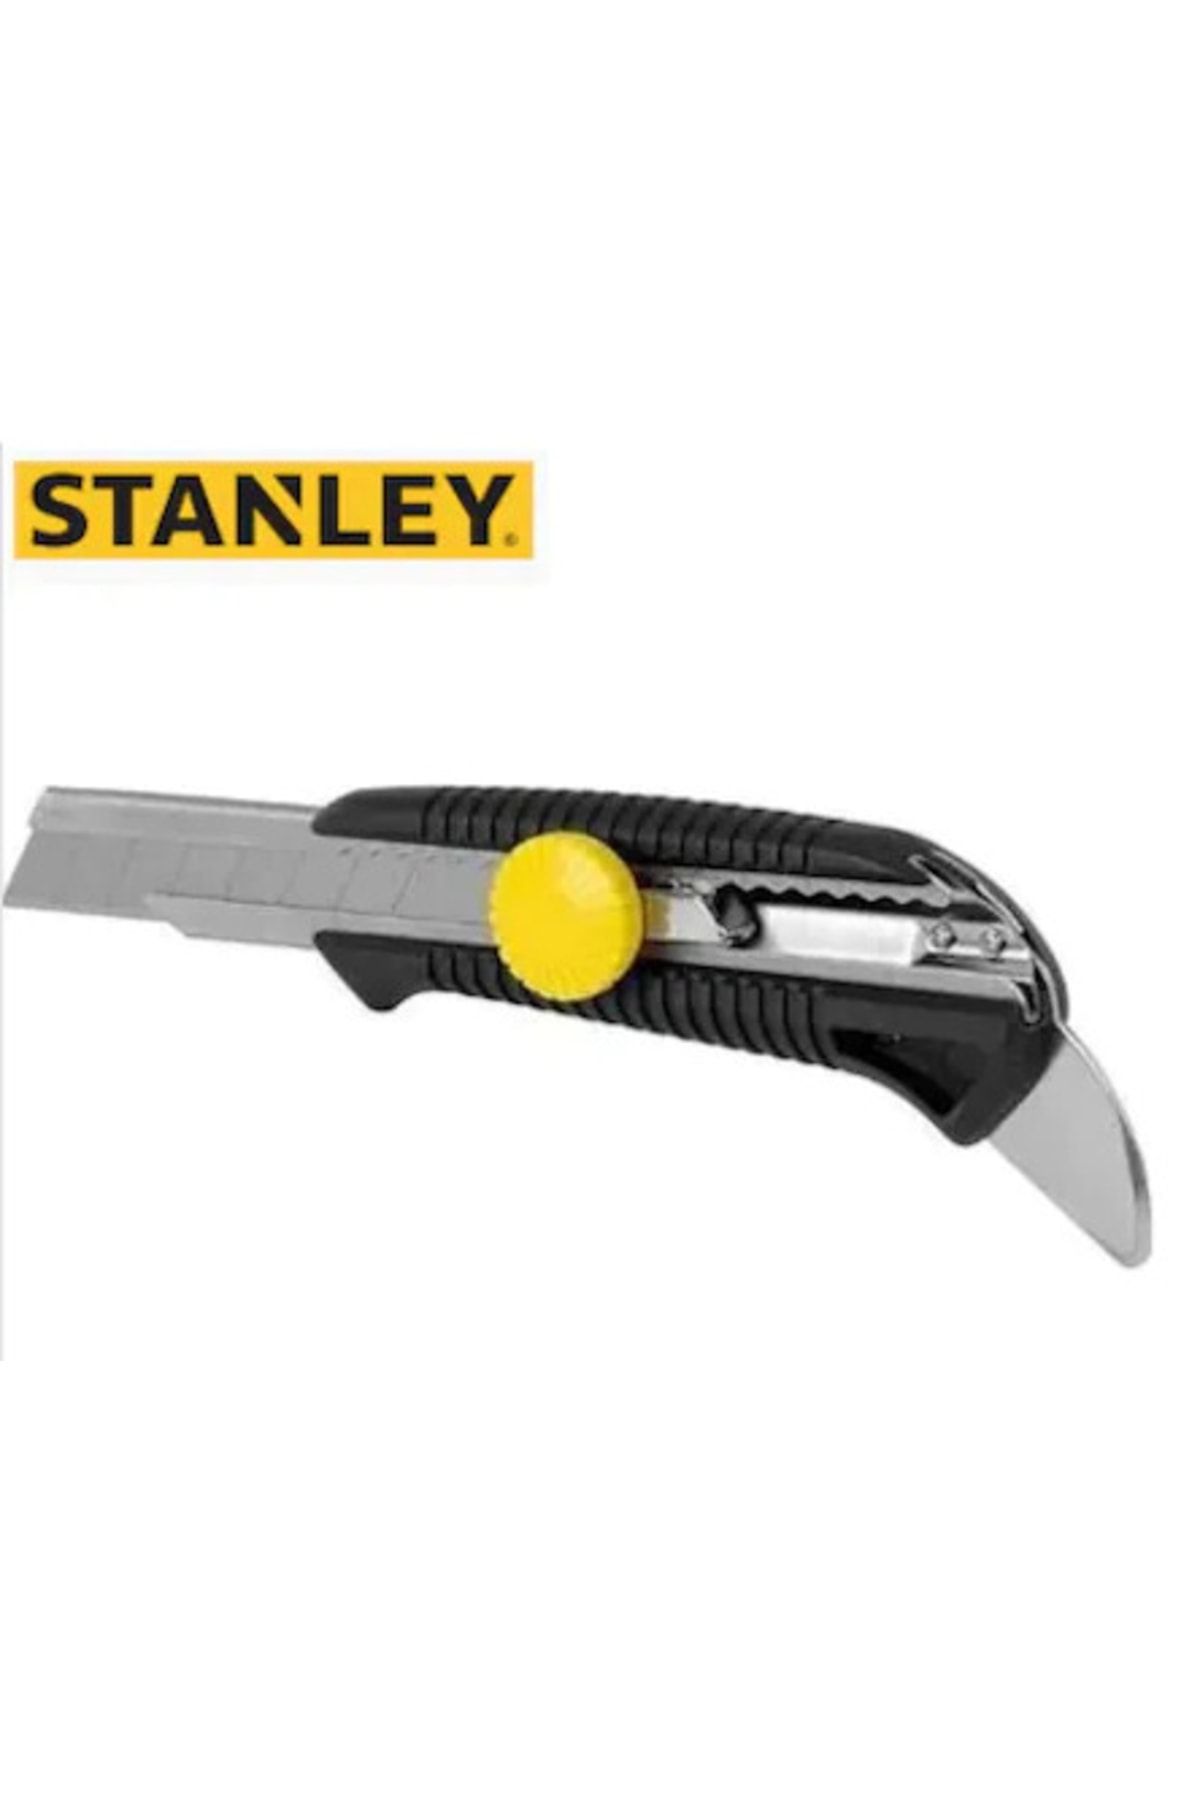 Stanley Maket Bıçağı Falçata 18mm Yüksek Kalite Maket Bıçak 6adet